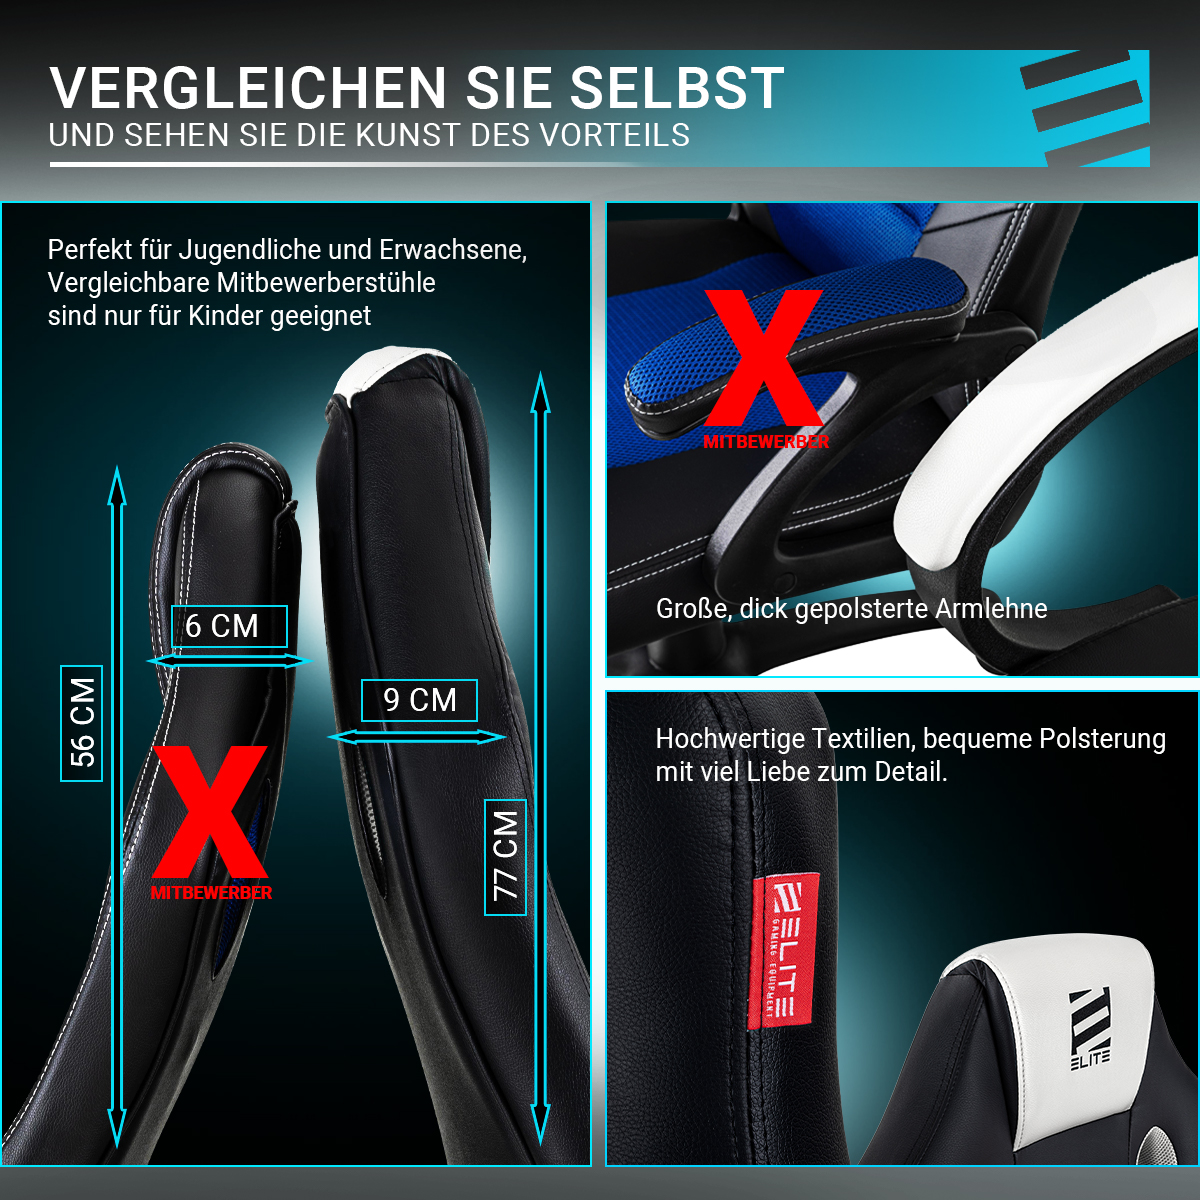 ELITE EXODUS, Memory-Schaum, Schwarz/Blau Stuhl, Armpolster, Gaming extra MG100 Wippmechanik, hohe Rückenlehne